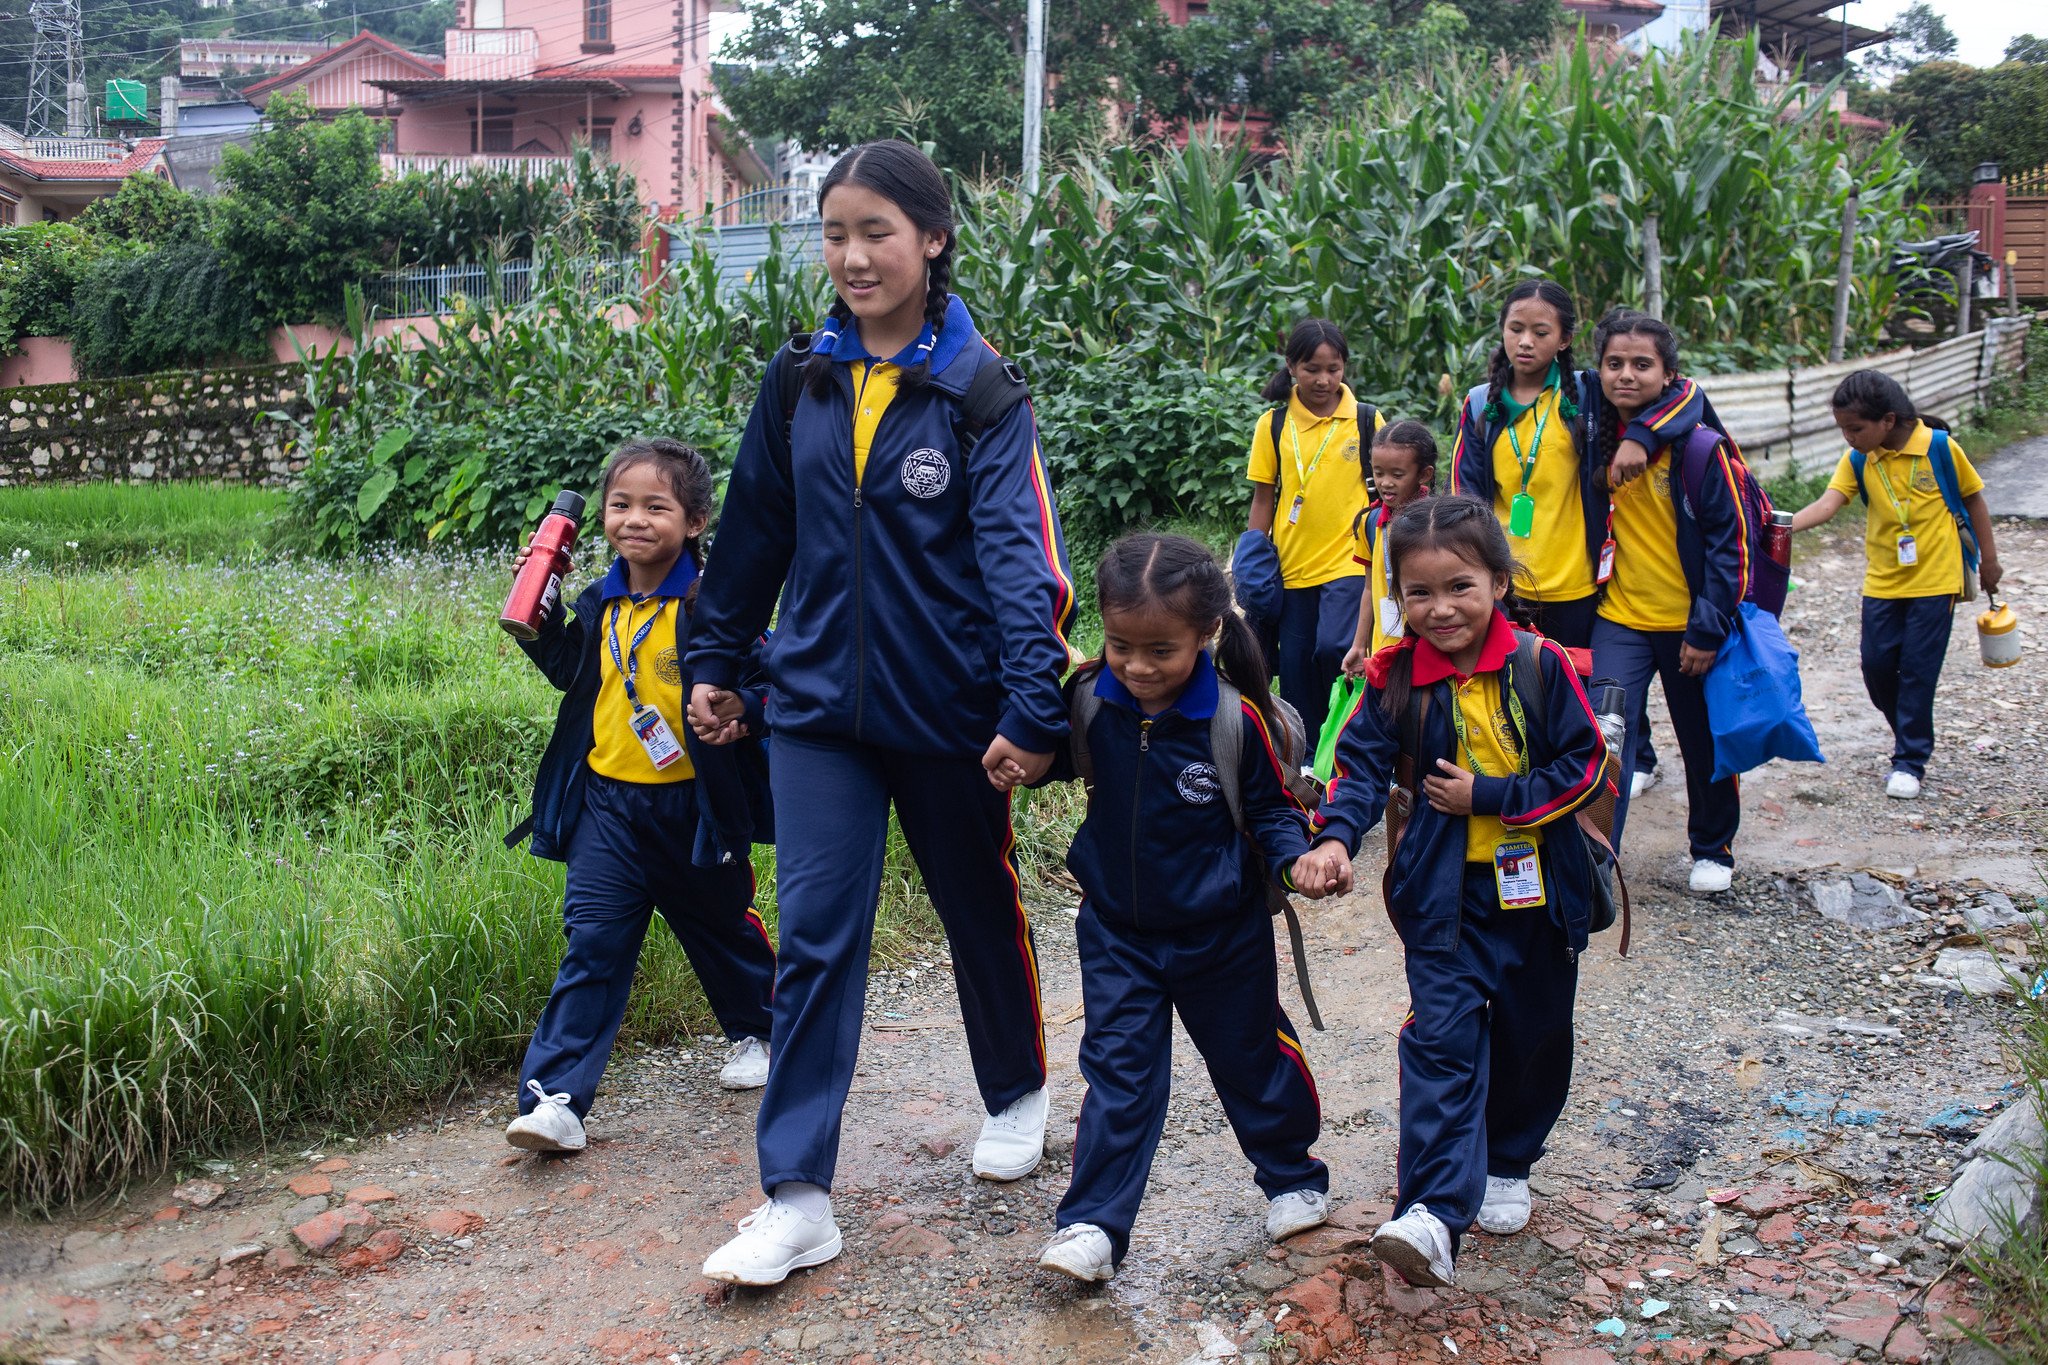  Girls return to their hostel from school in Kathmandu. (Photo by Uma Bista) 